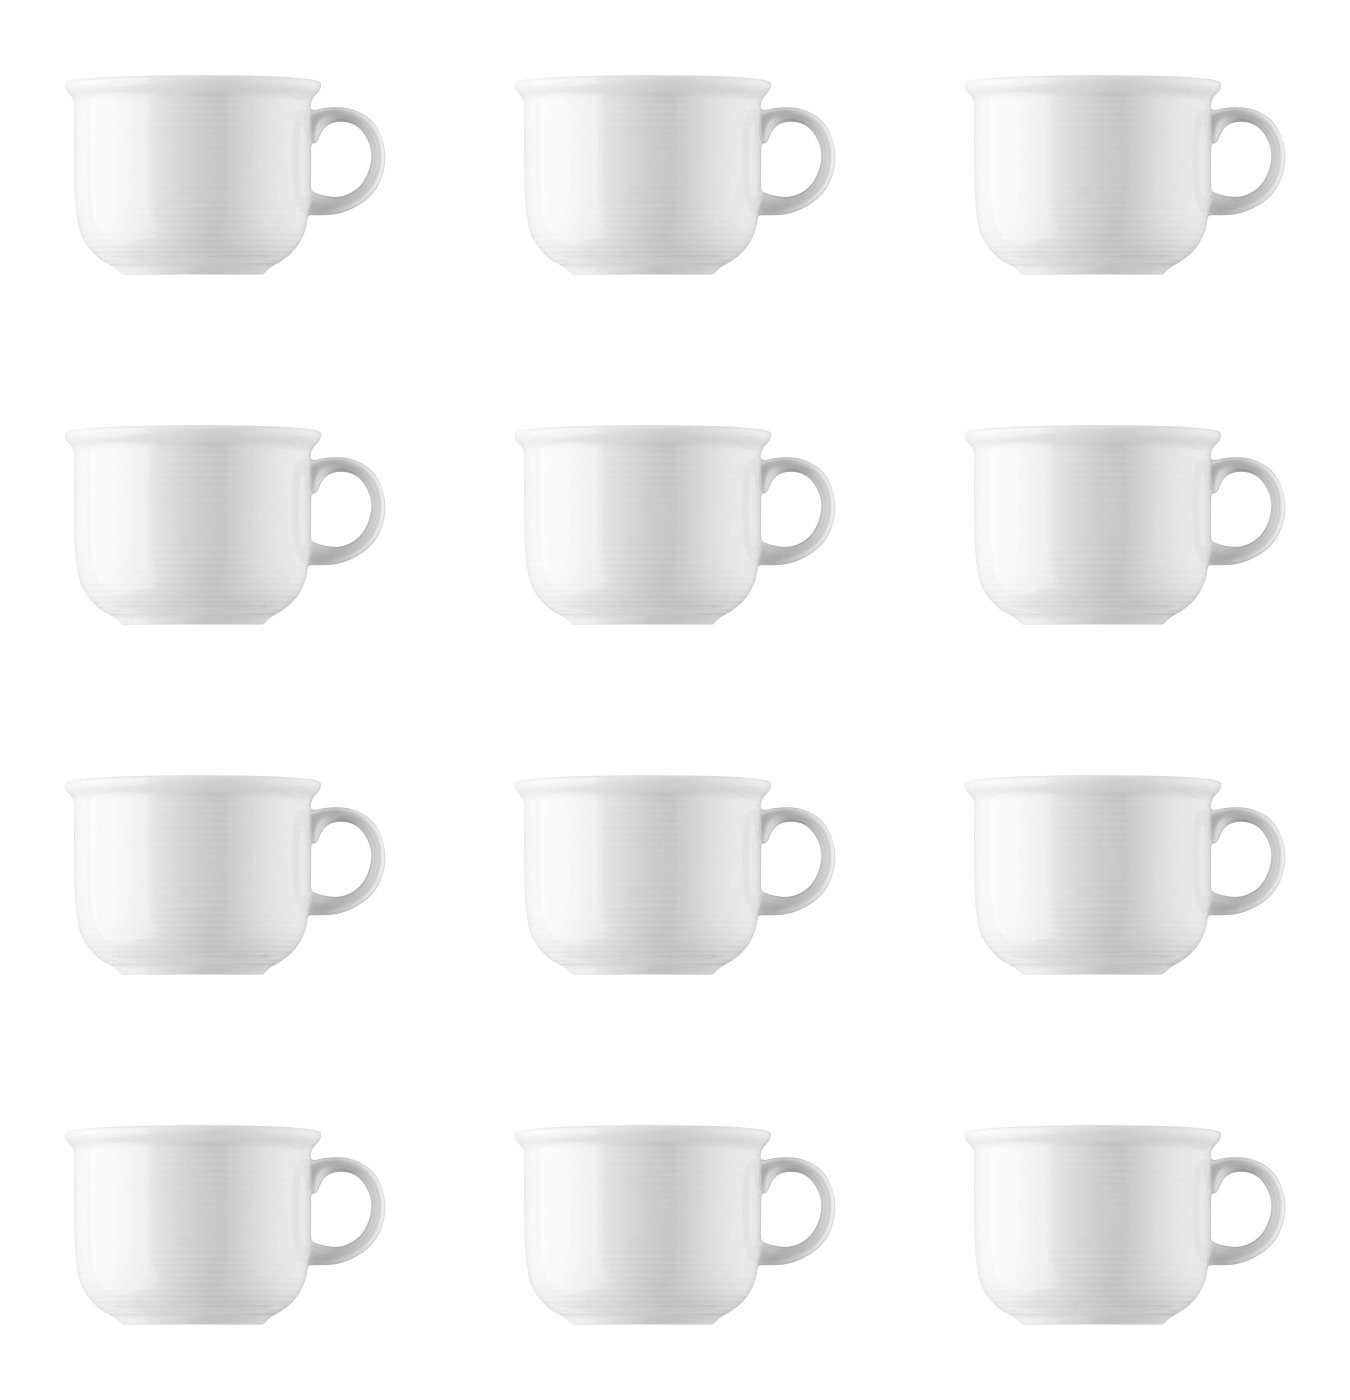 Thomas Porzellan Tasse Kaffee-Obertasse - TREND Weiß - 12 Stück, Porzellan, Porzellan, spülmaschinenfest und mikrowellengeeignet